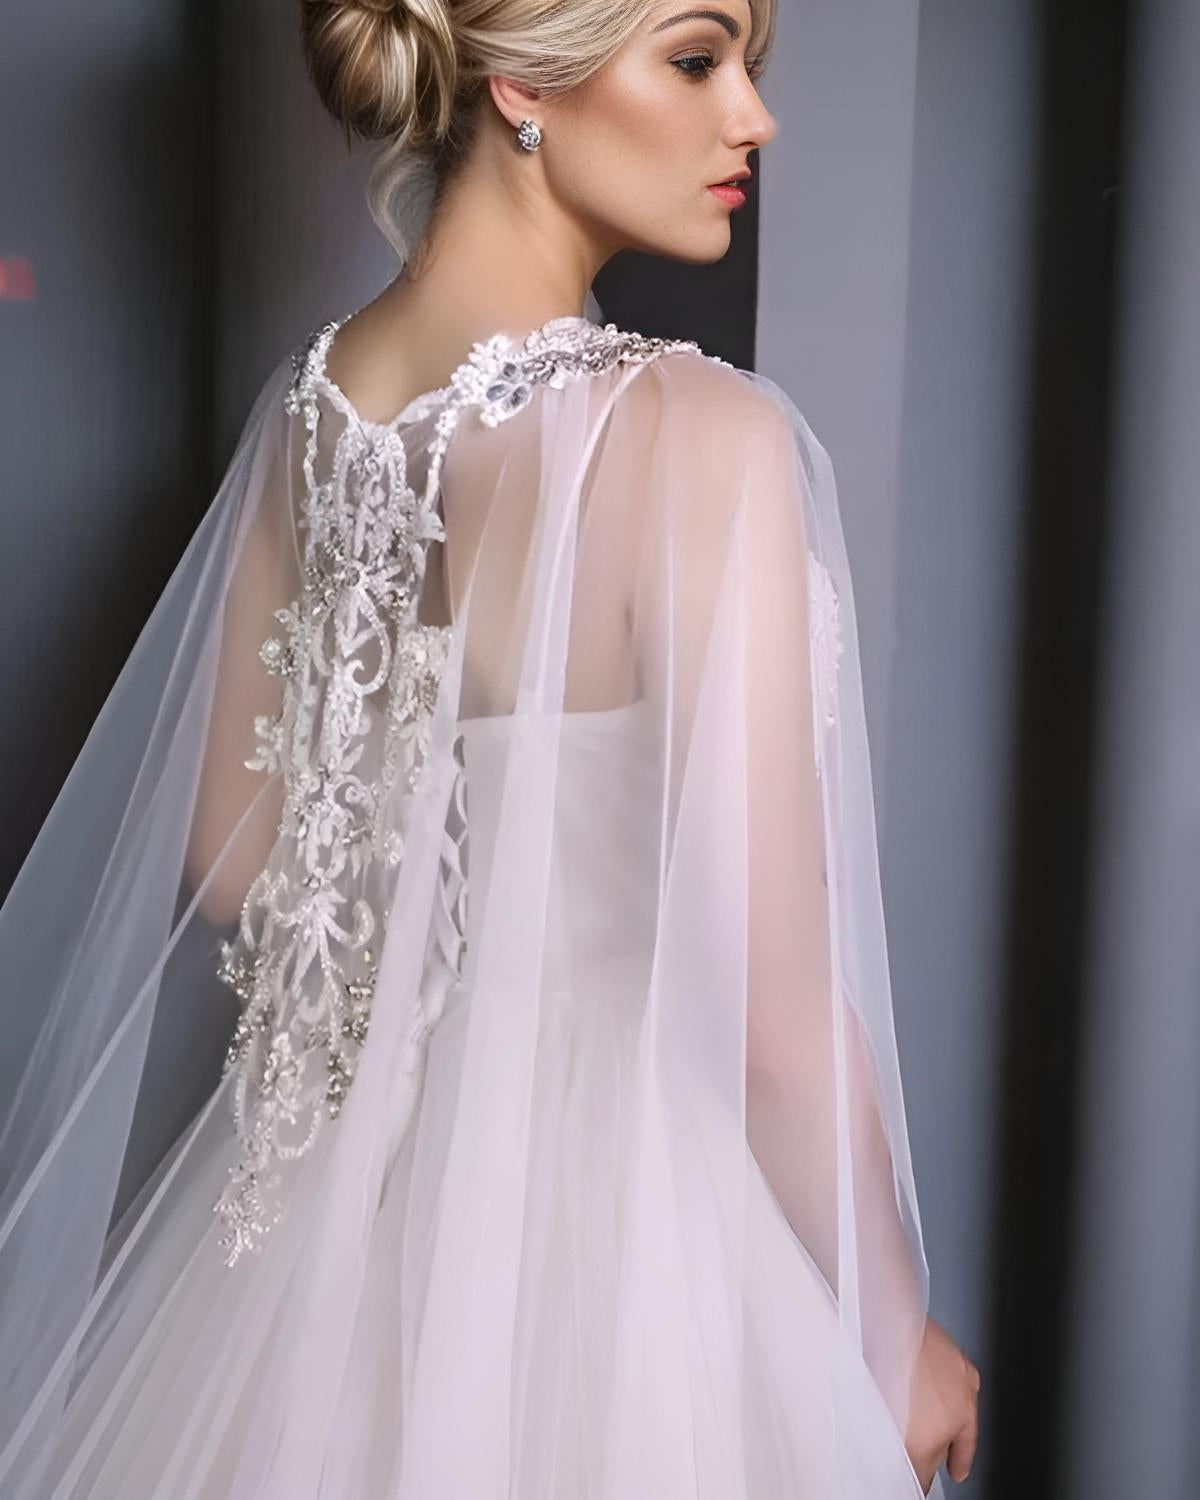 Bridal Cape Cloak Veil with Beading & Lace